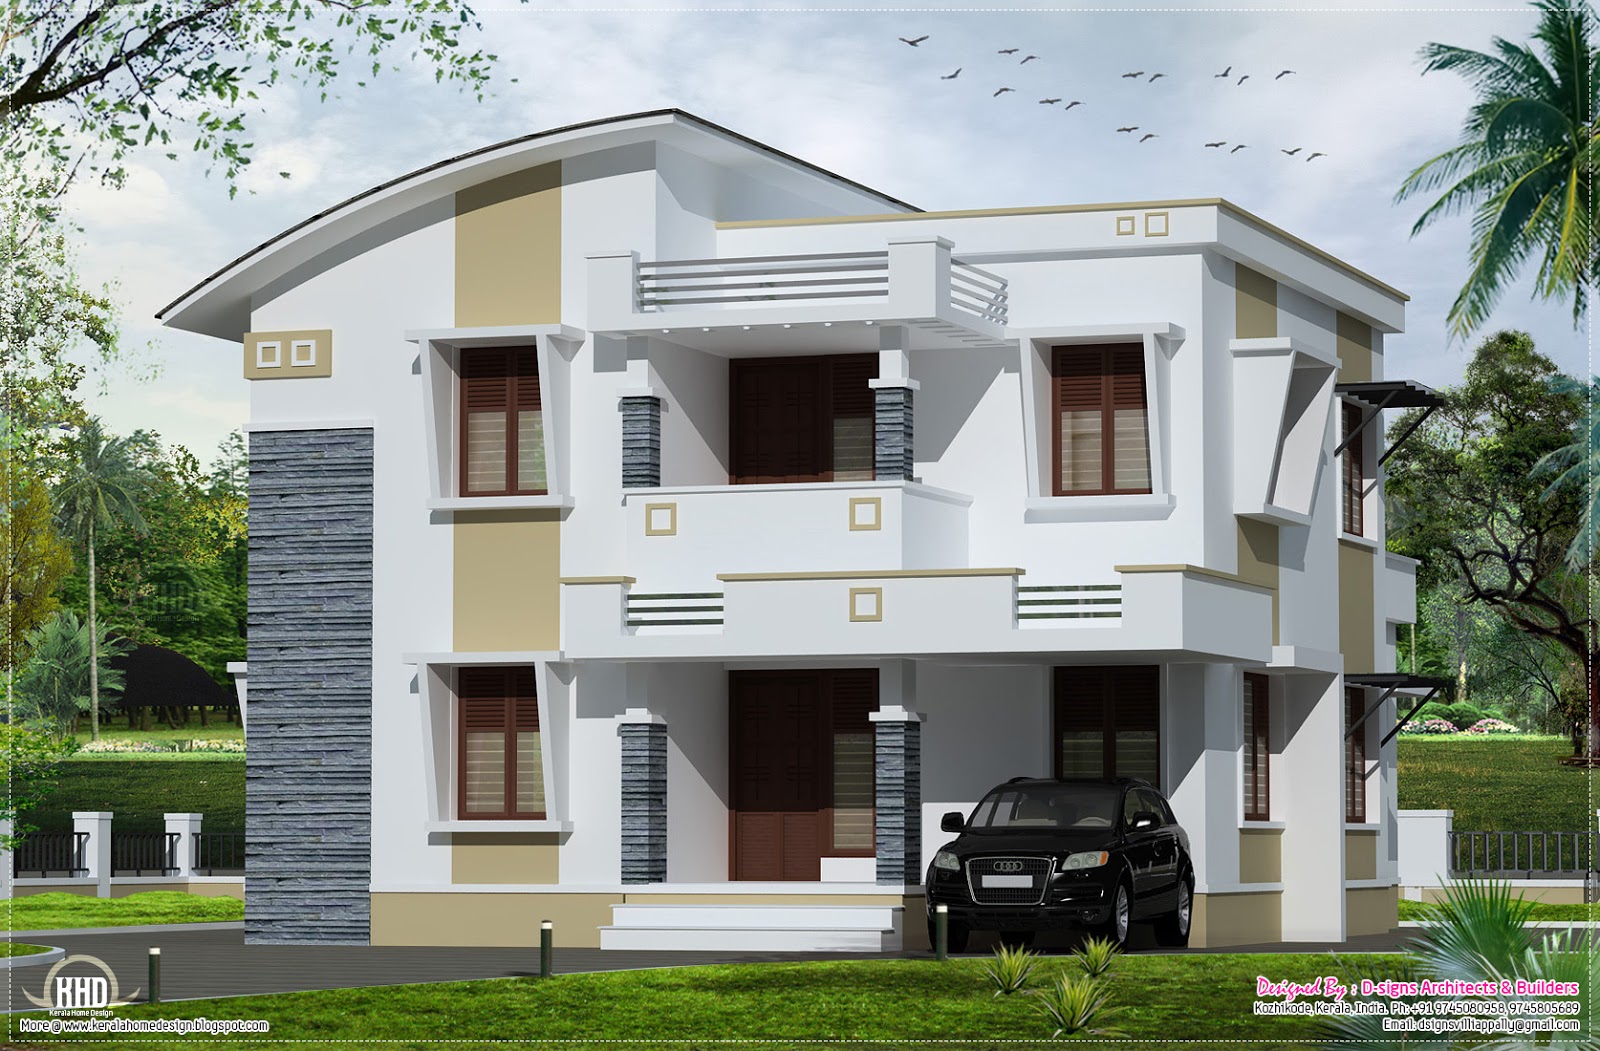  Simple  flat roof home  design  in 1800 sq feet Home  Kerala  